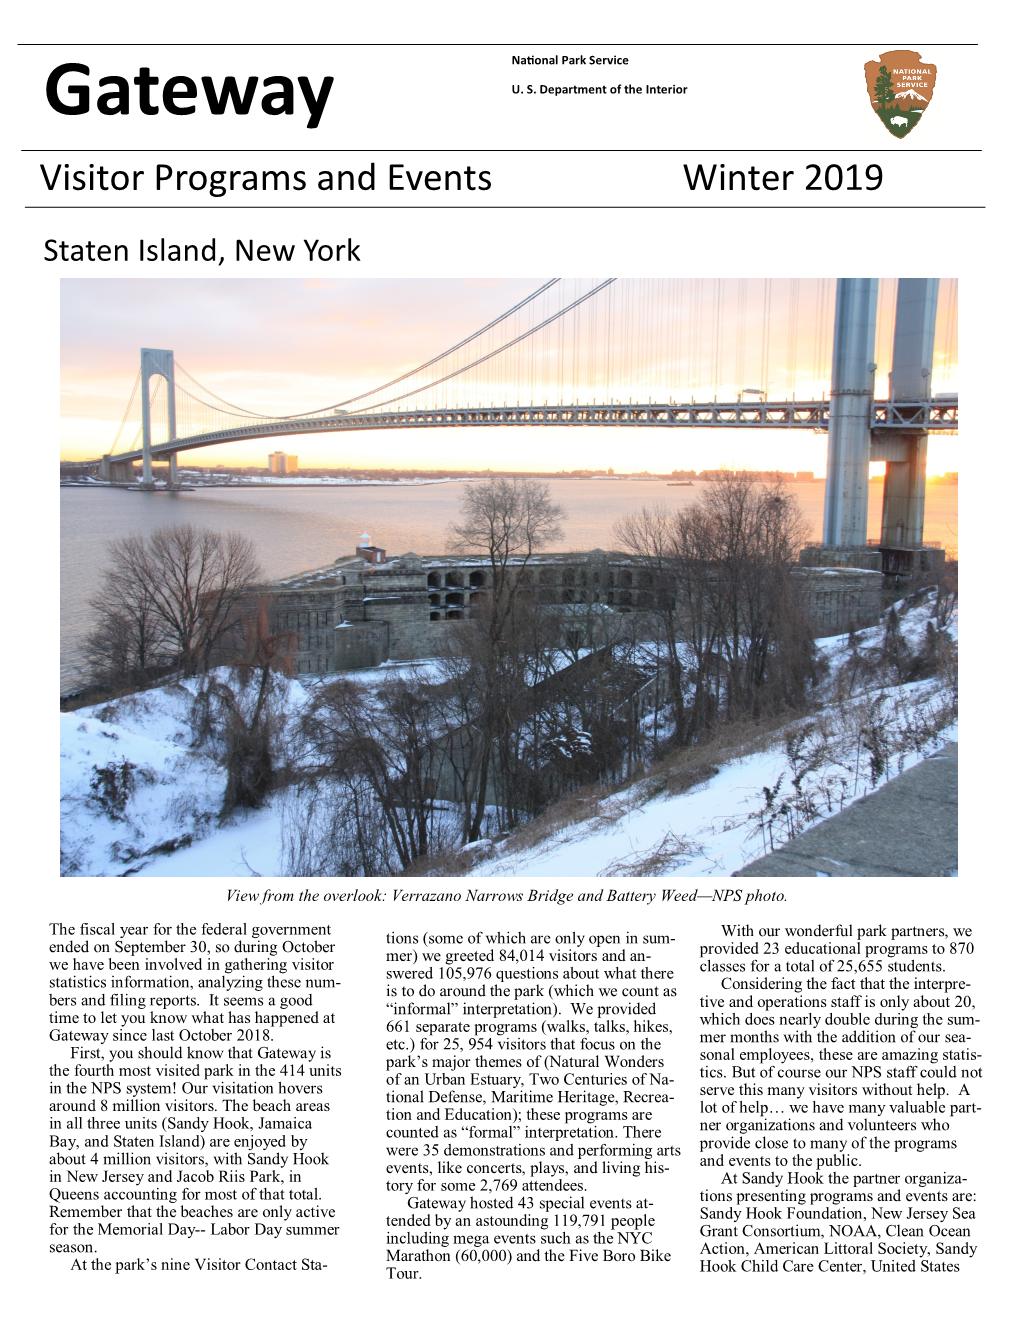 Staten Island Visitor Program Guide